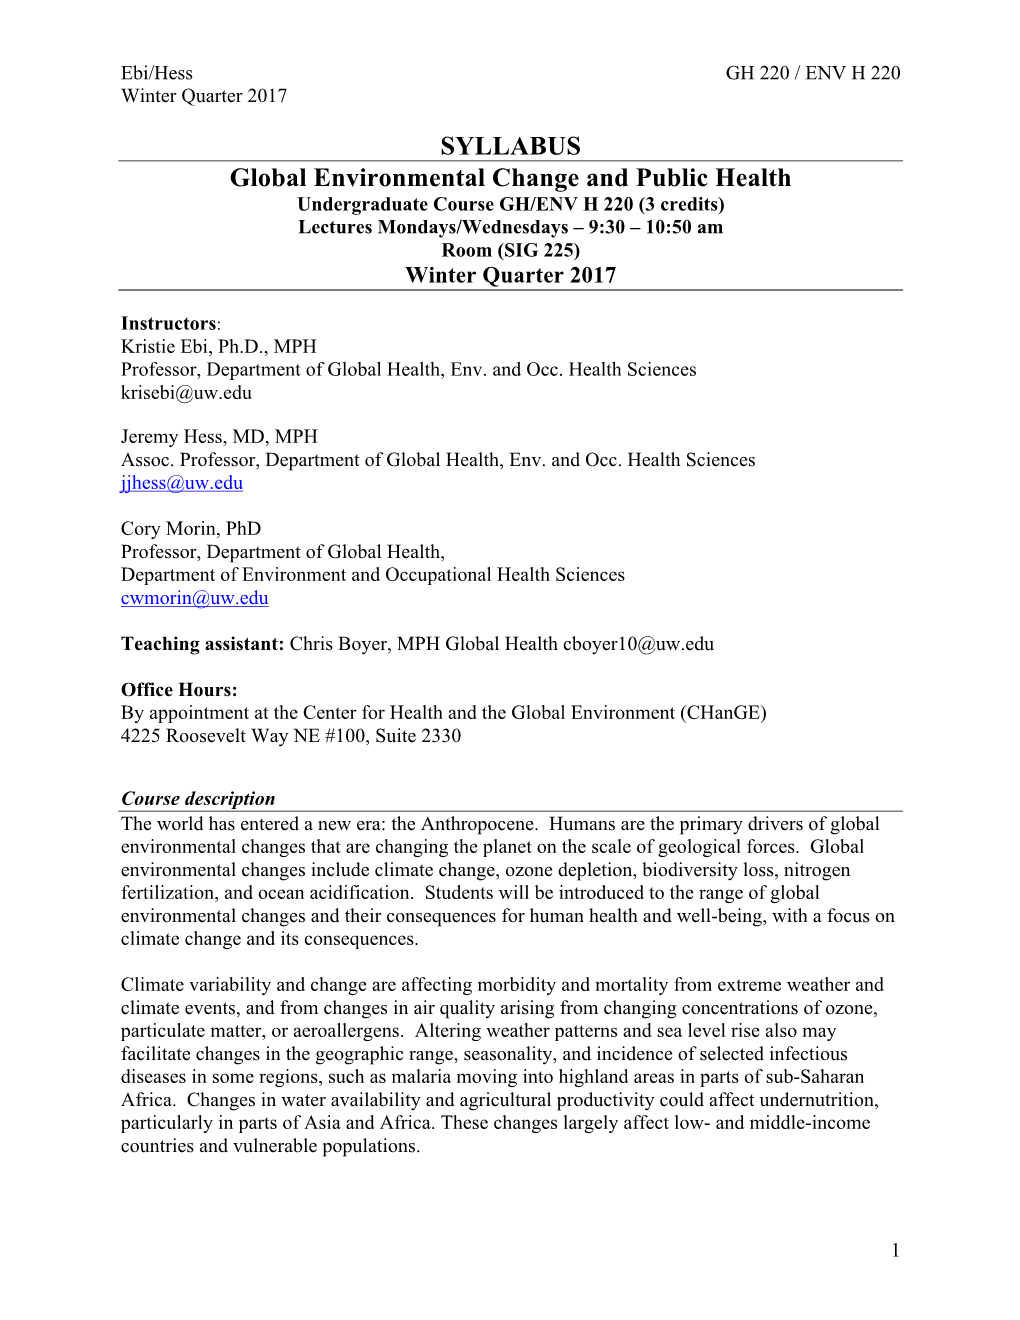 SYLLABUS Global Environmental Change and Public Health